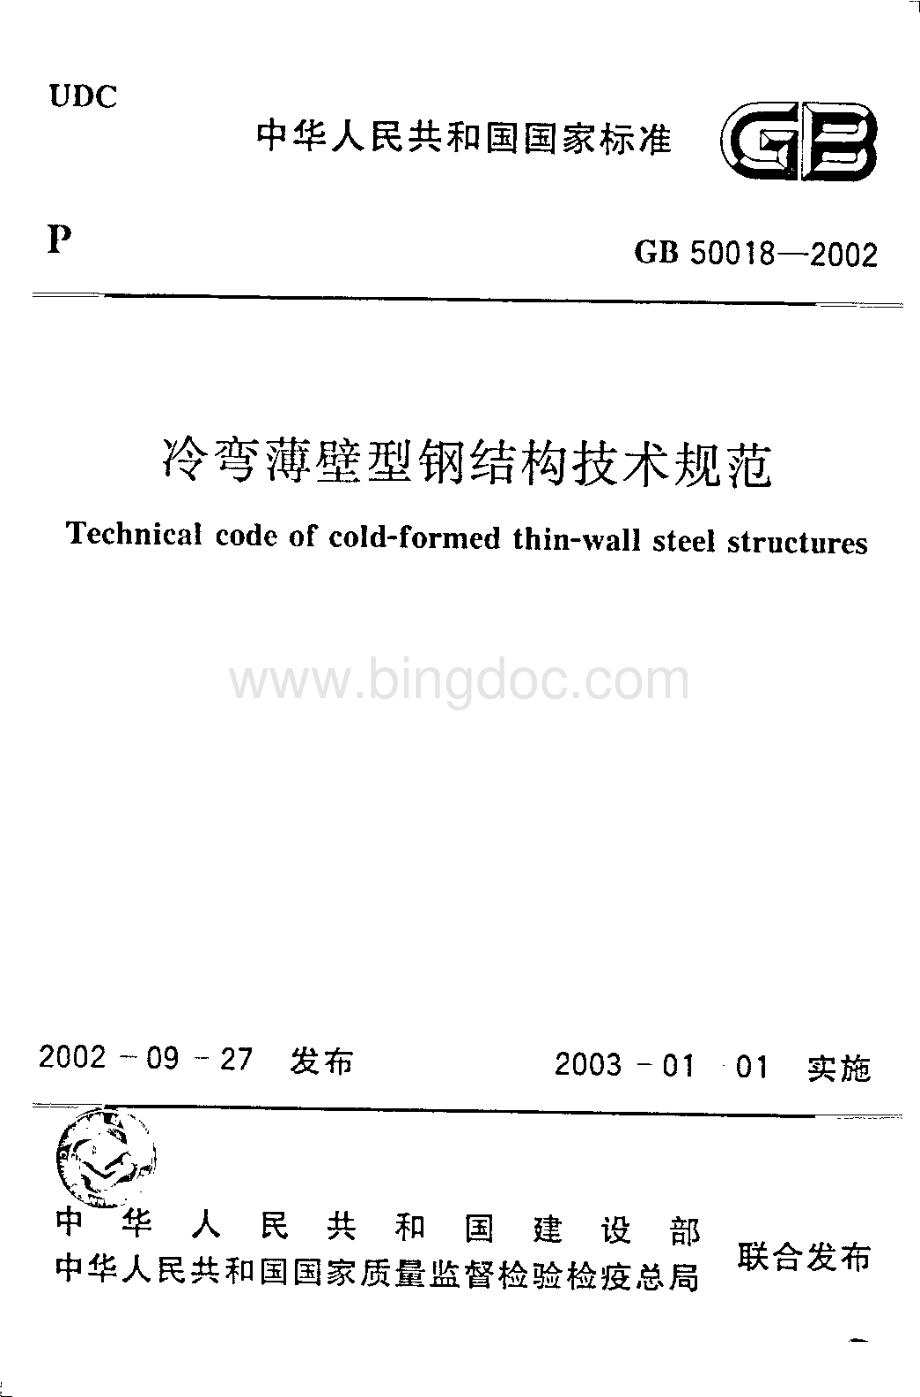 GB 50018-2002 冷弯薄壁型钢结构技术规范.pdf